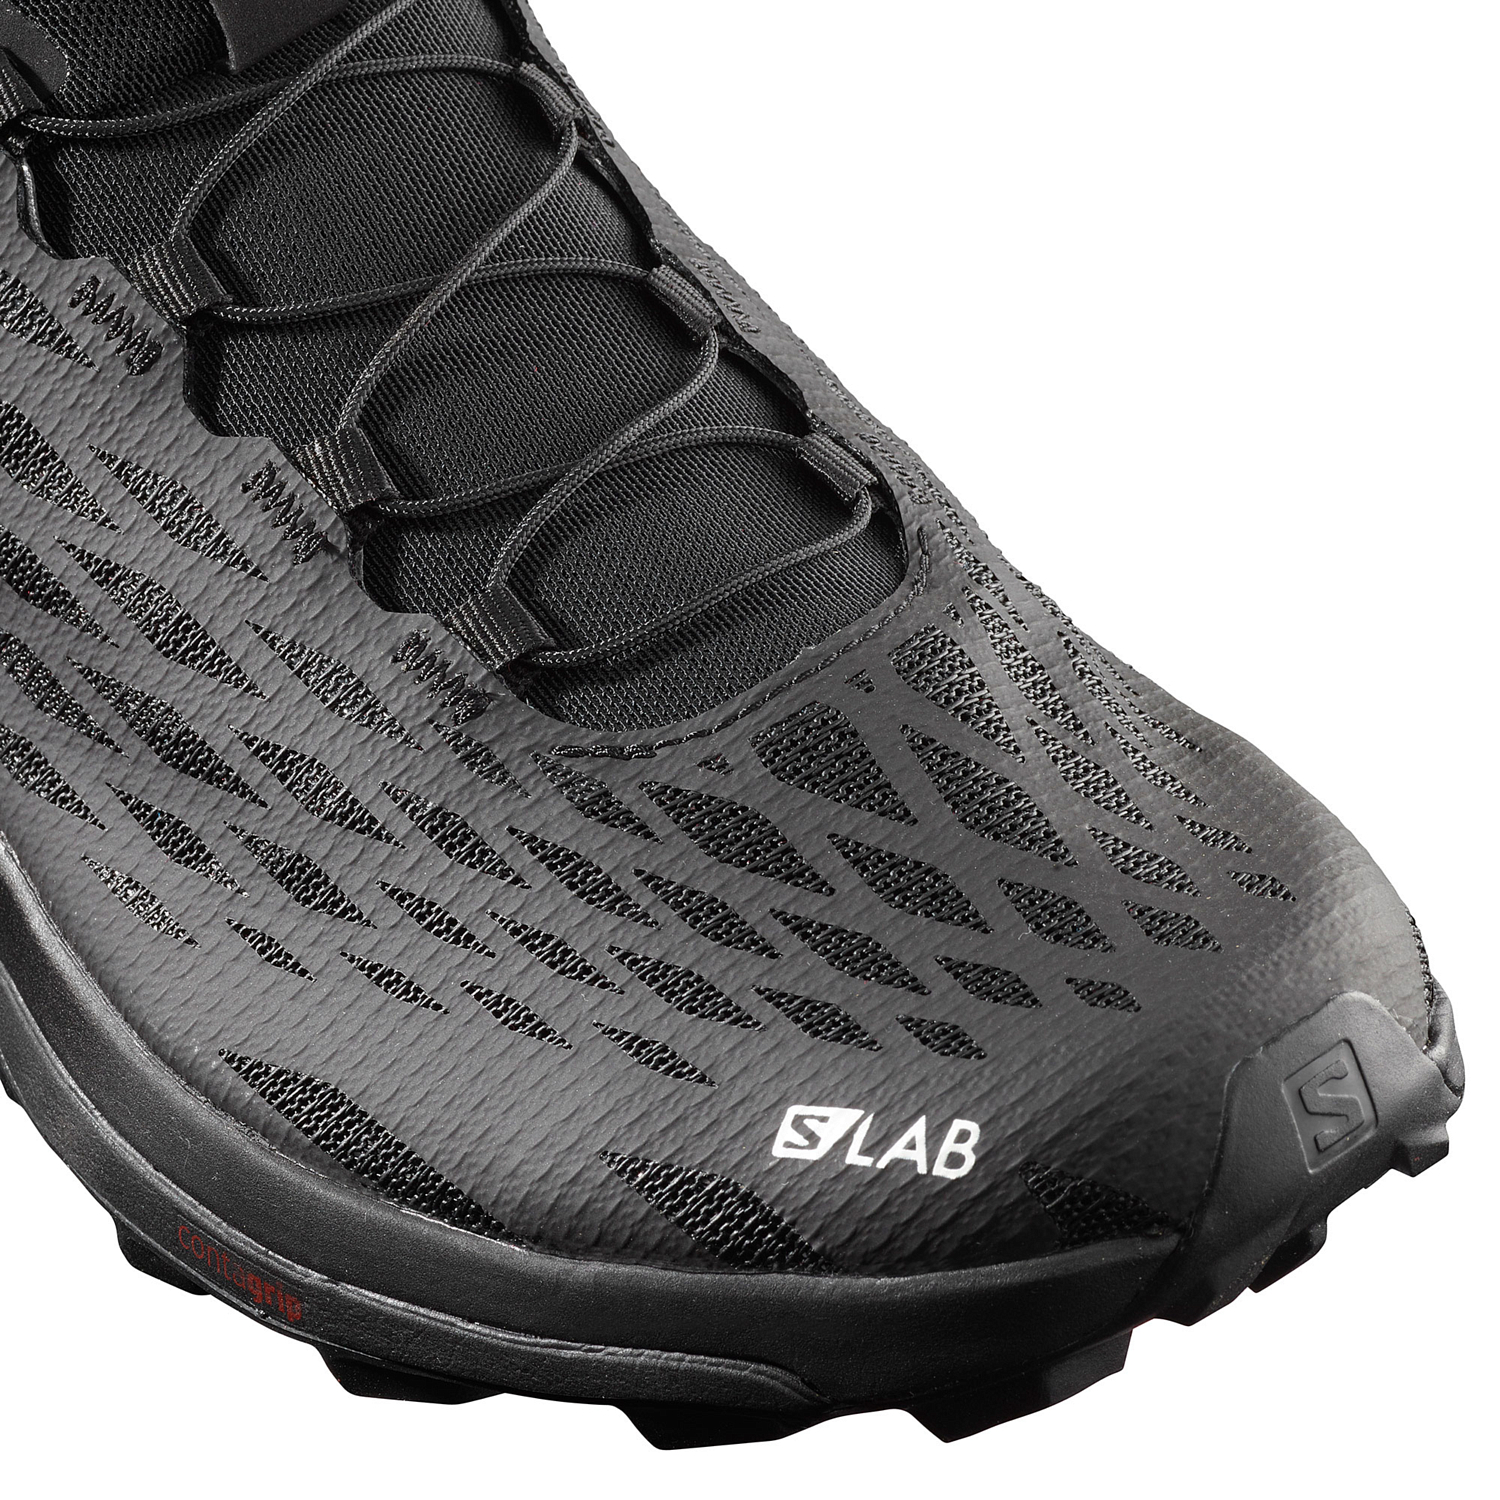 Беговые кроссовки для XC Salomon 2019 S/LAB XA Amphib 2 Black/Black/Transcend Blue